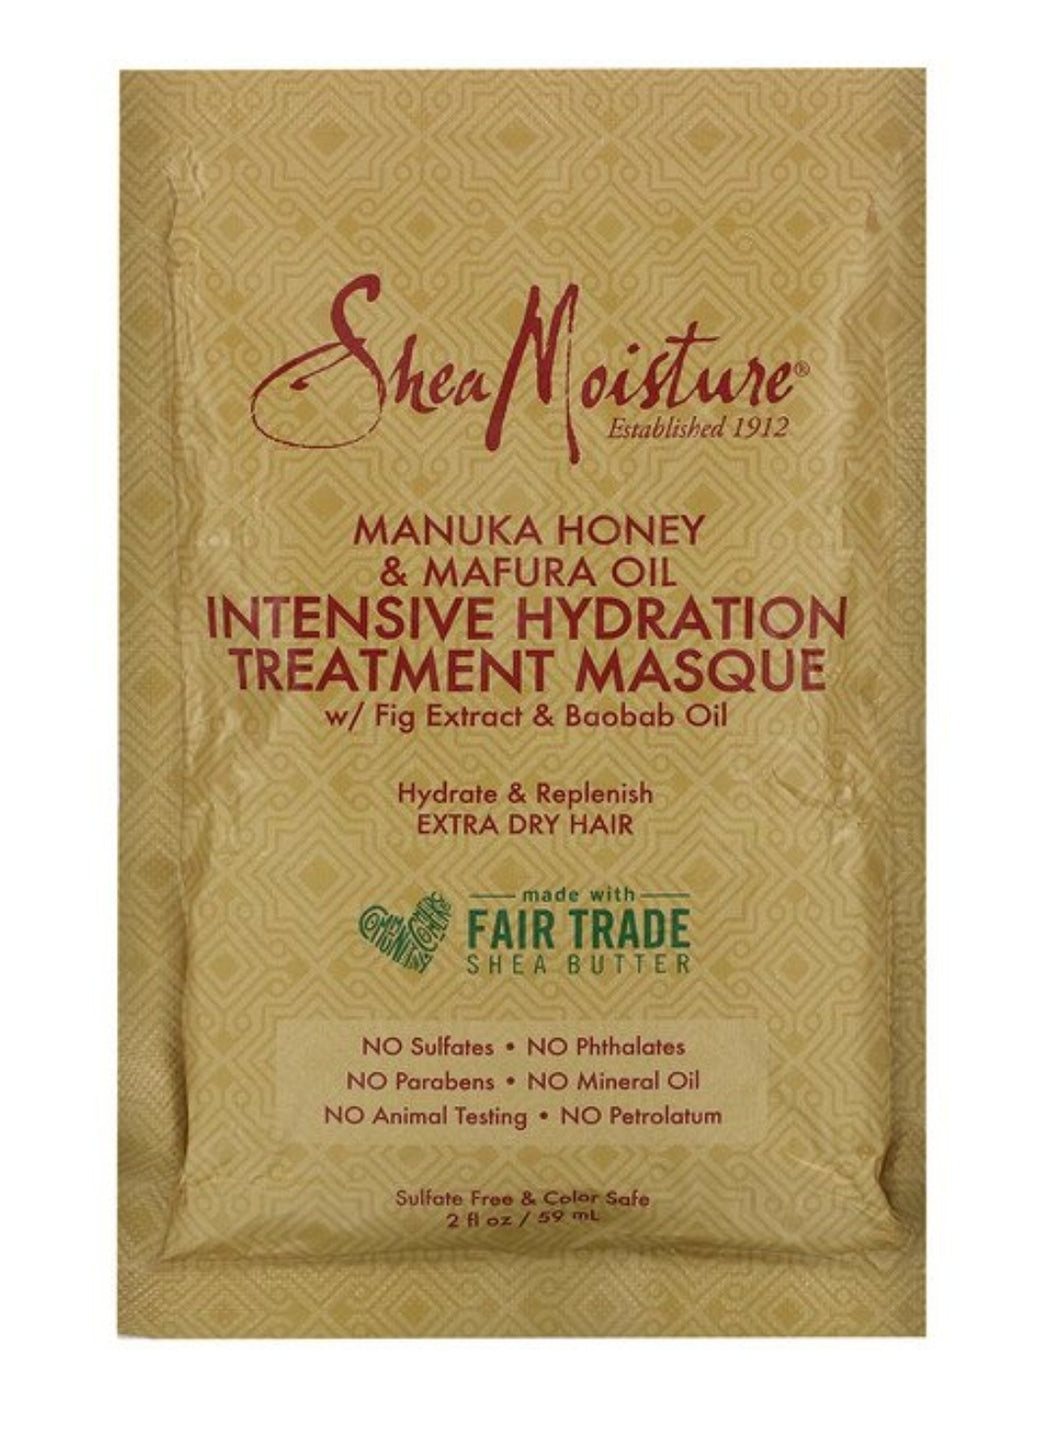 Shea moisture masque packet bundle